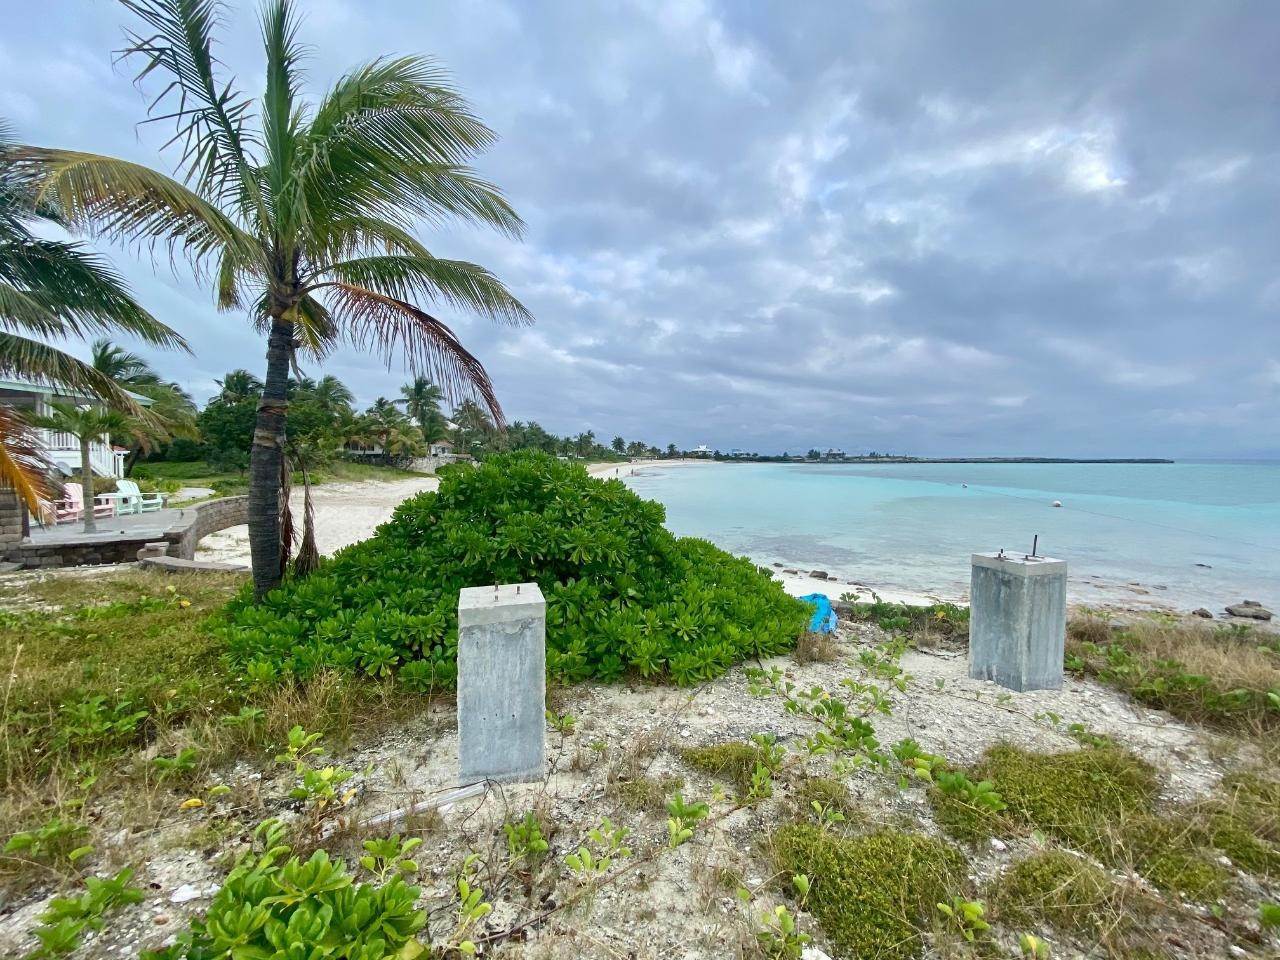 6. Lots / Acreage for Sale at Chub Cay, Berry Islands, Bahamas